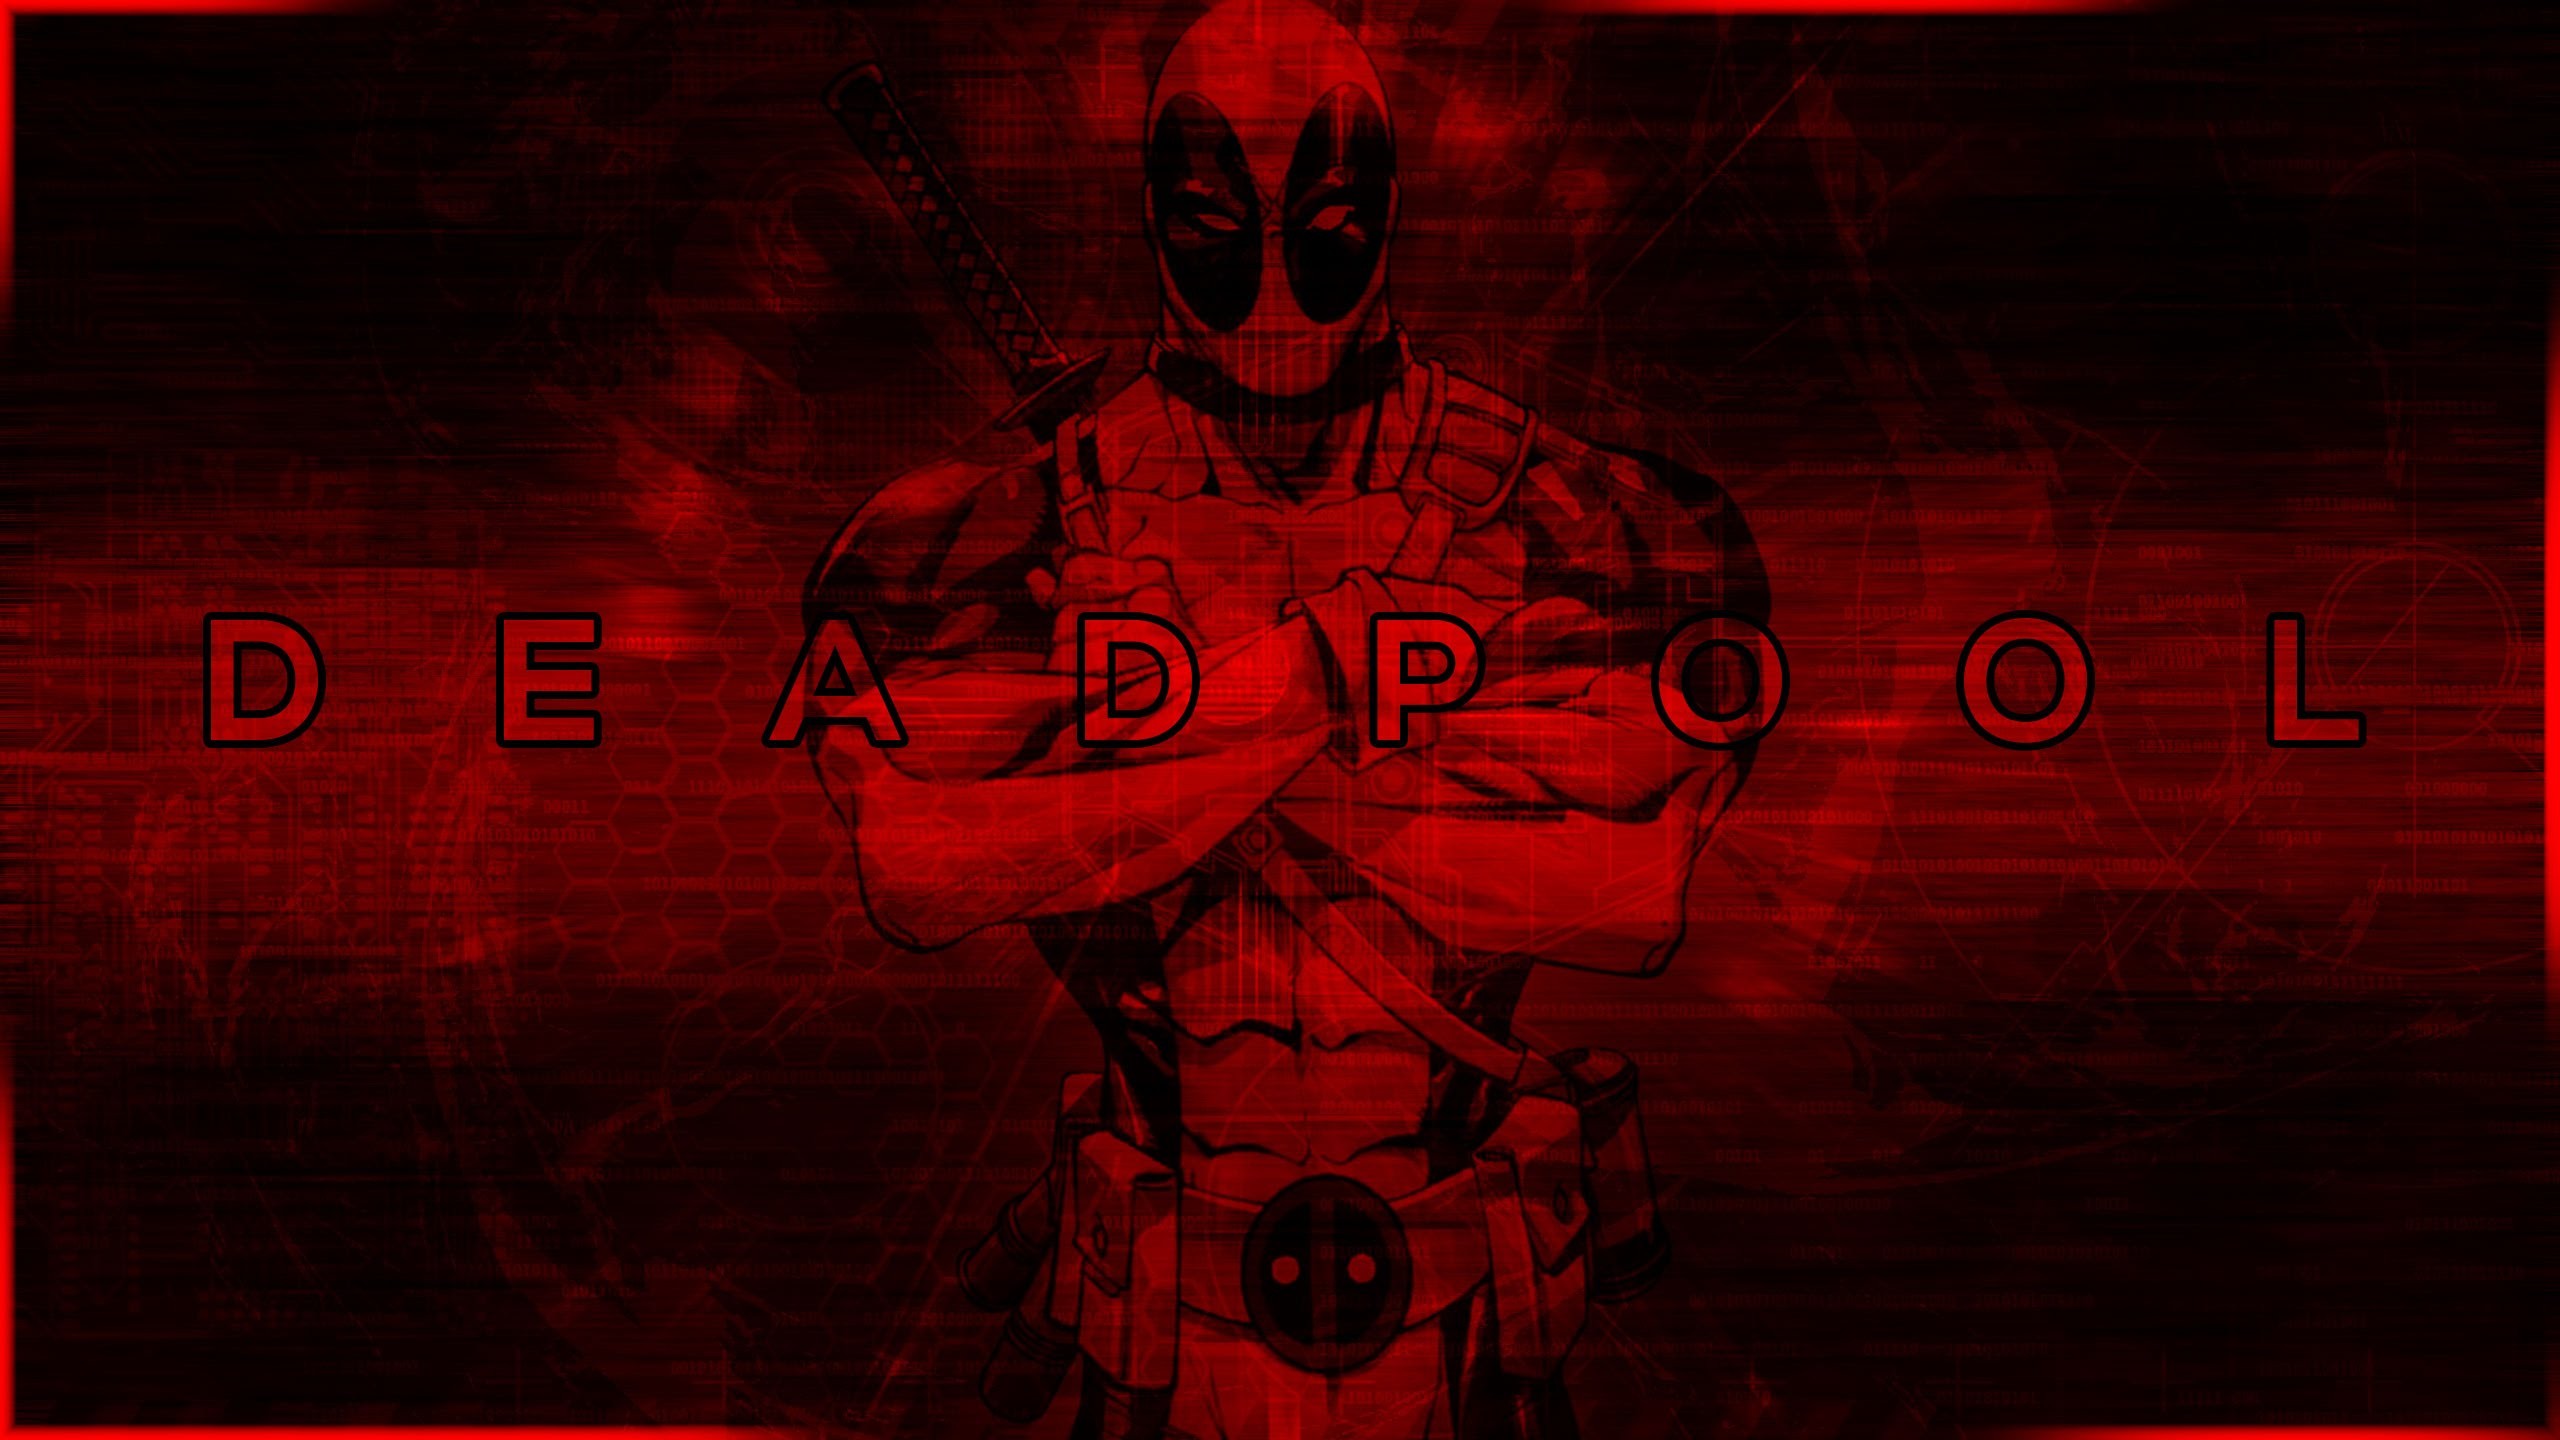  Deadpool  HD  wallpaper    Download free cool backgrounds  